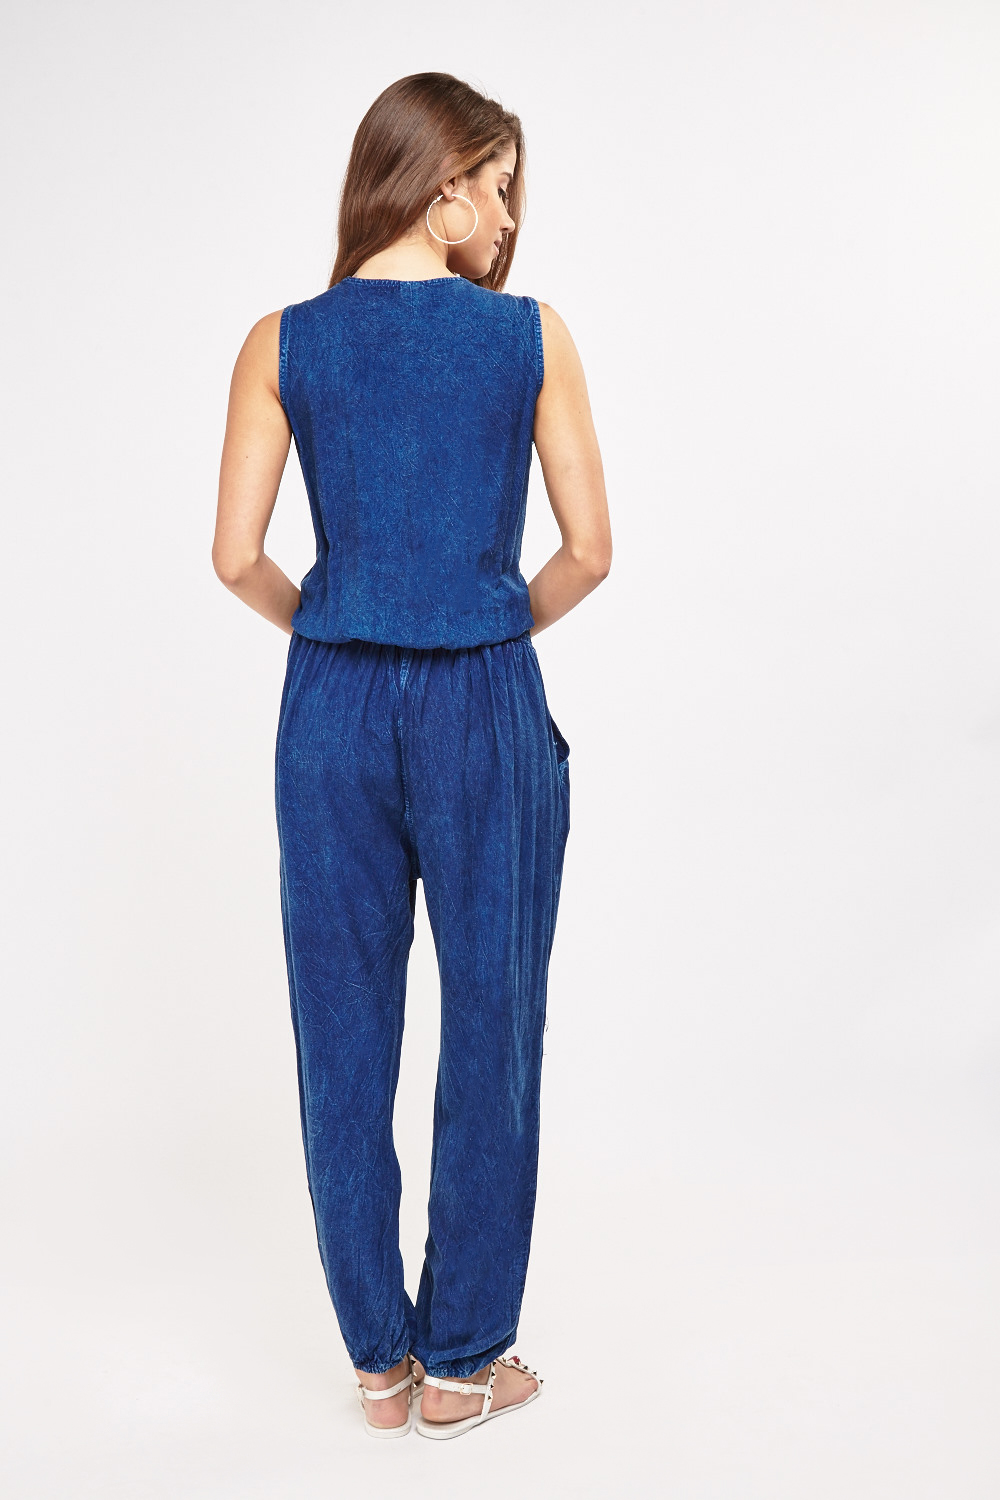 Sleeveless Washed Dark Blue Jumpsuit - Just $7